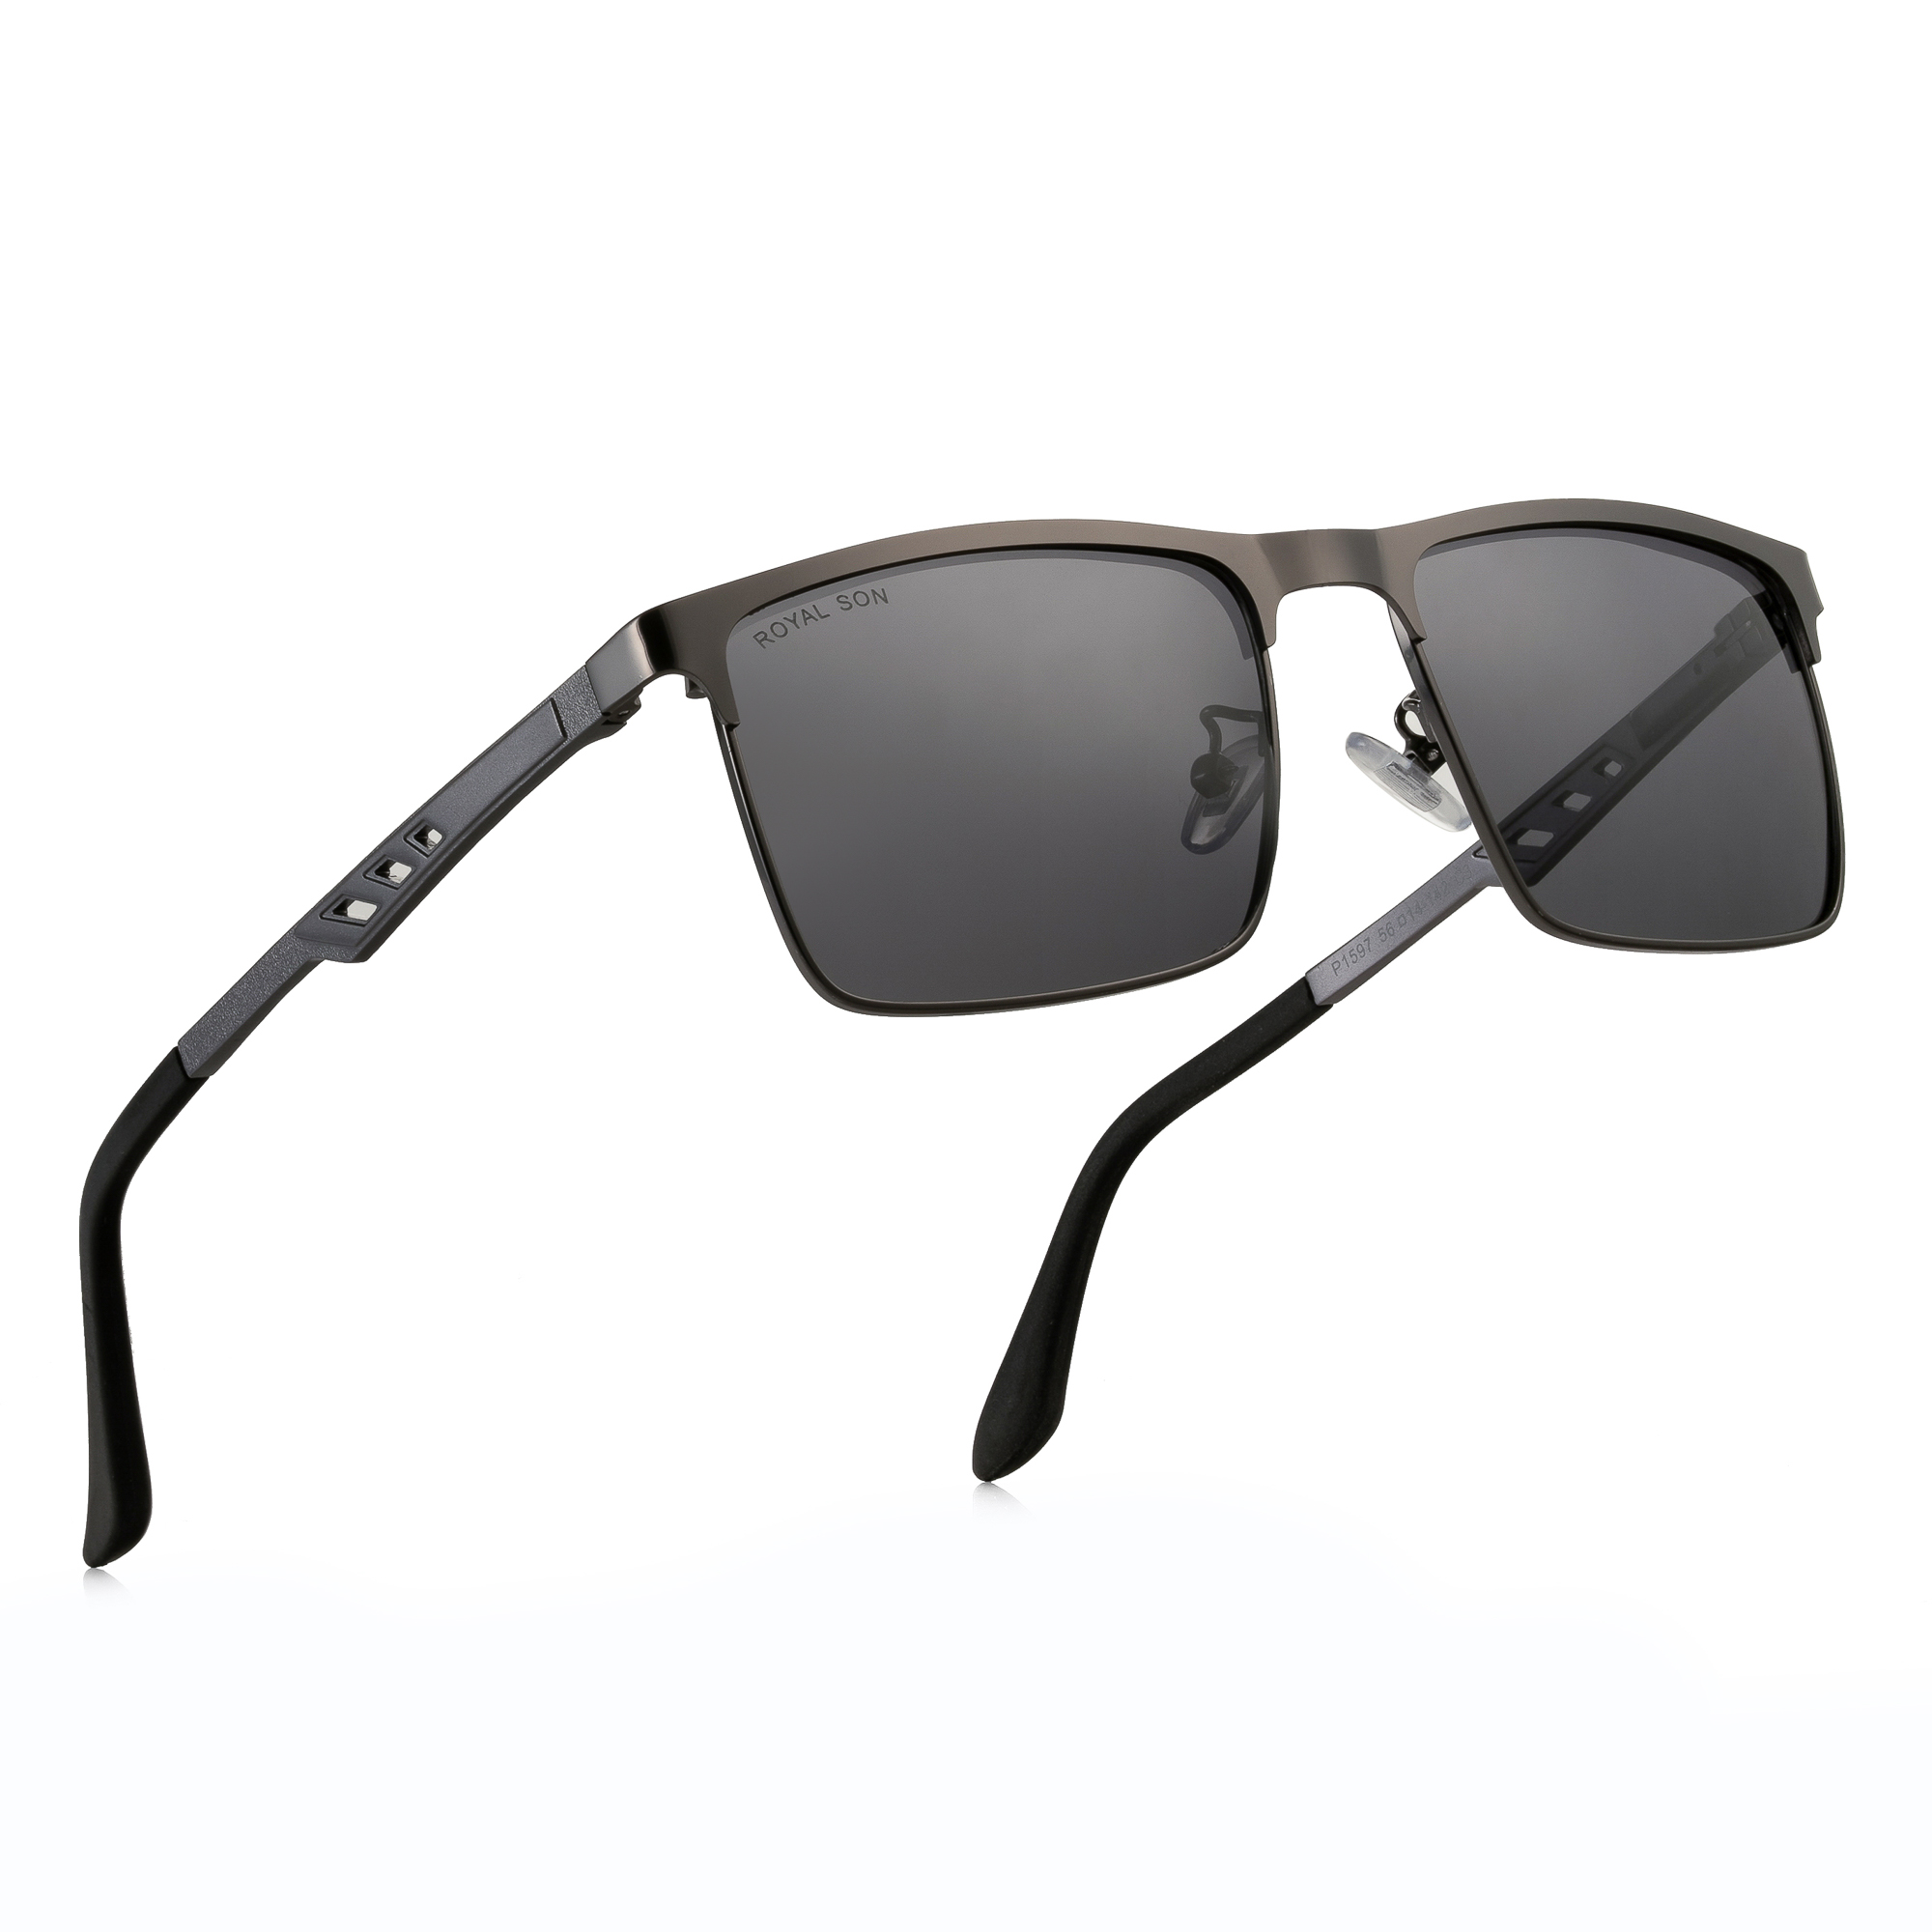 Royal Son Trendy Rectangle Stylish Fashion Polarized Sunglasses Men's UV400